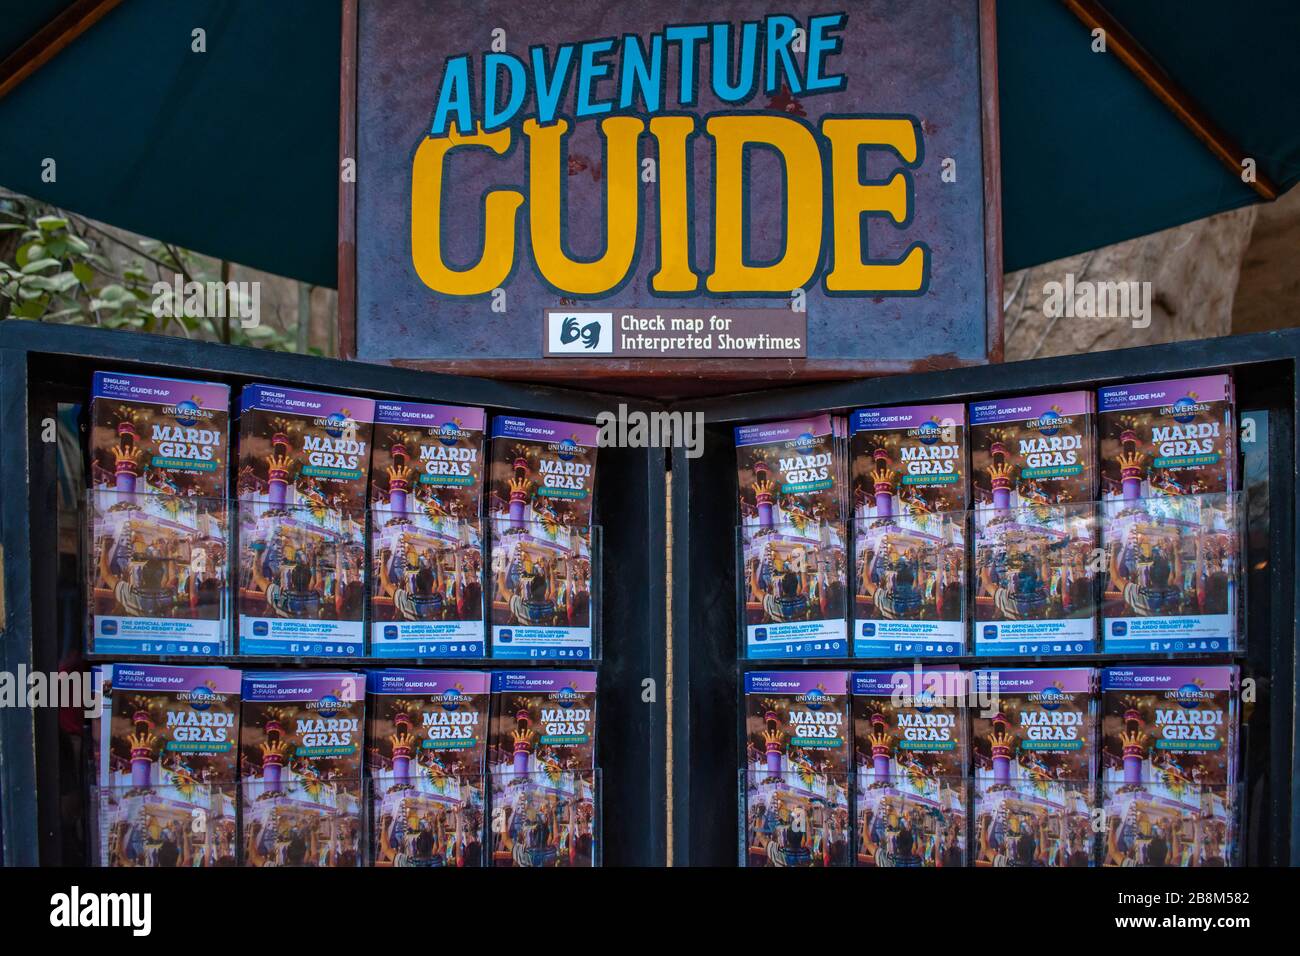 2019 Universal Studios Orlando Map and Islands of Adventure Map 